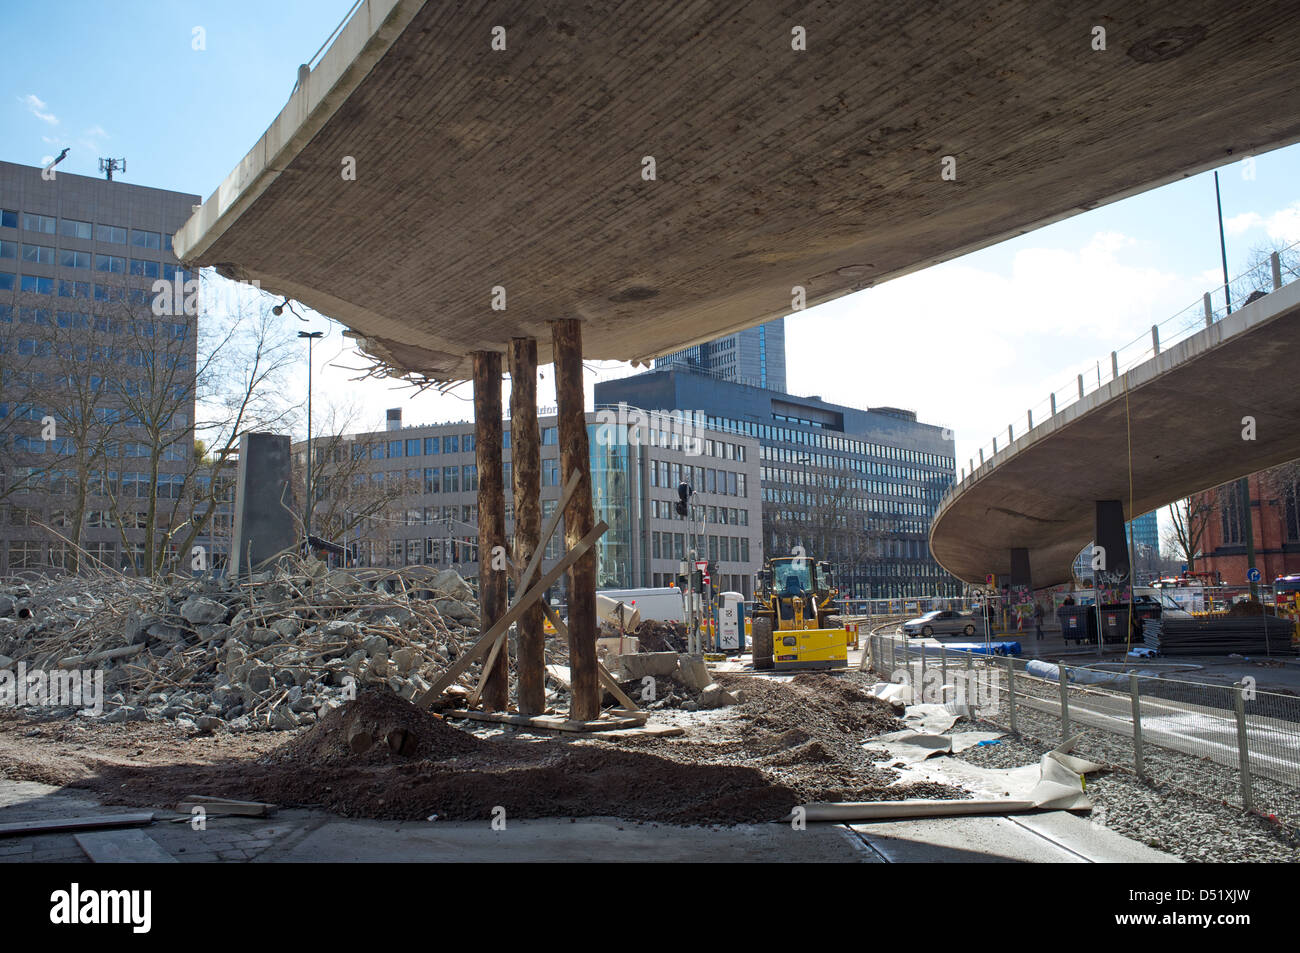 Flyover being demolished, Dusseldorf, Germany. Stock Photo